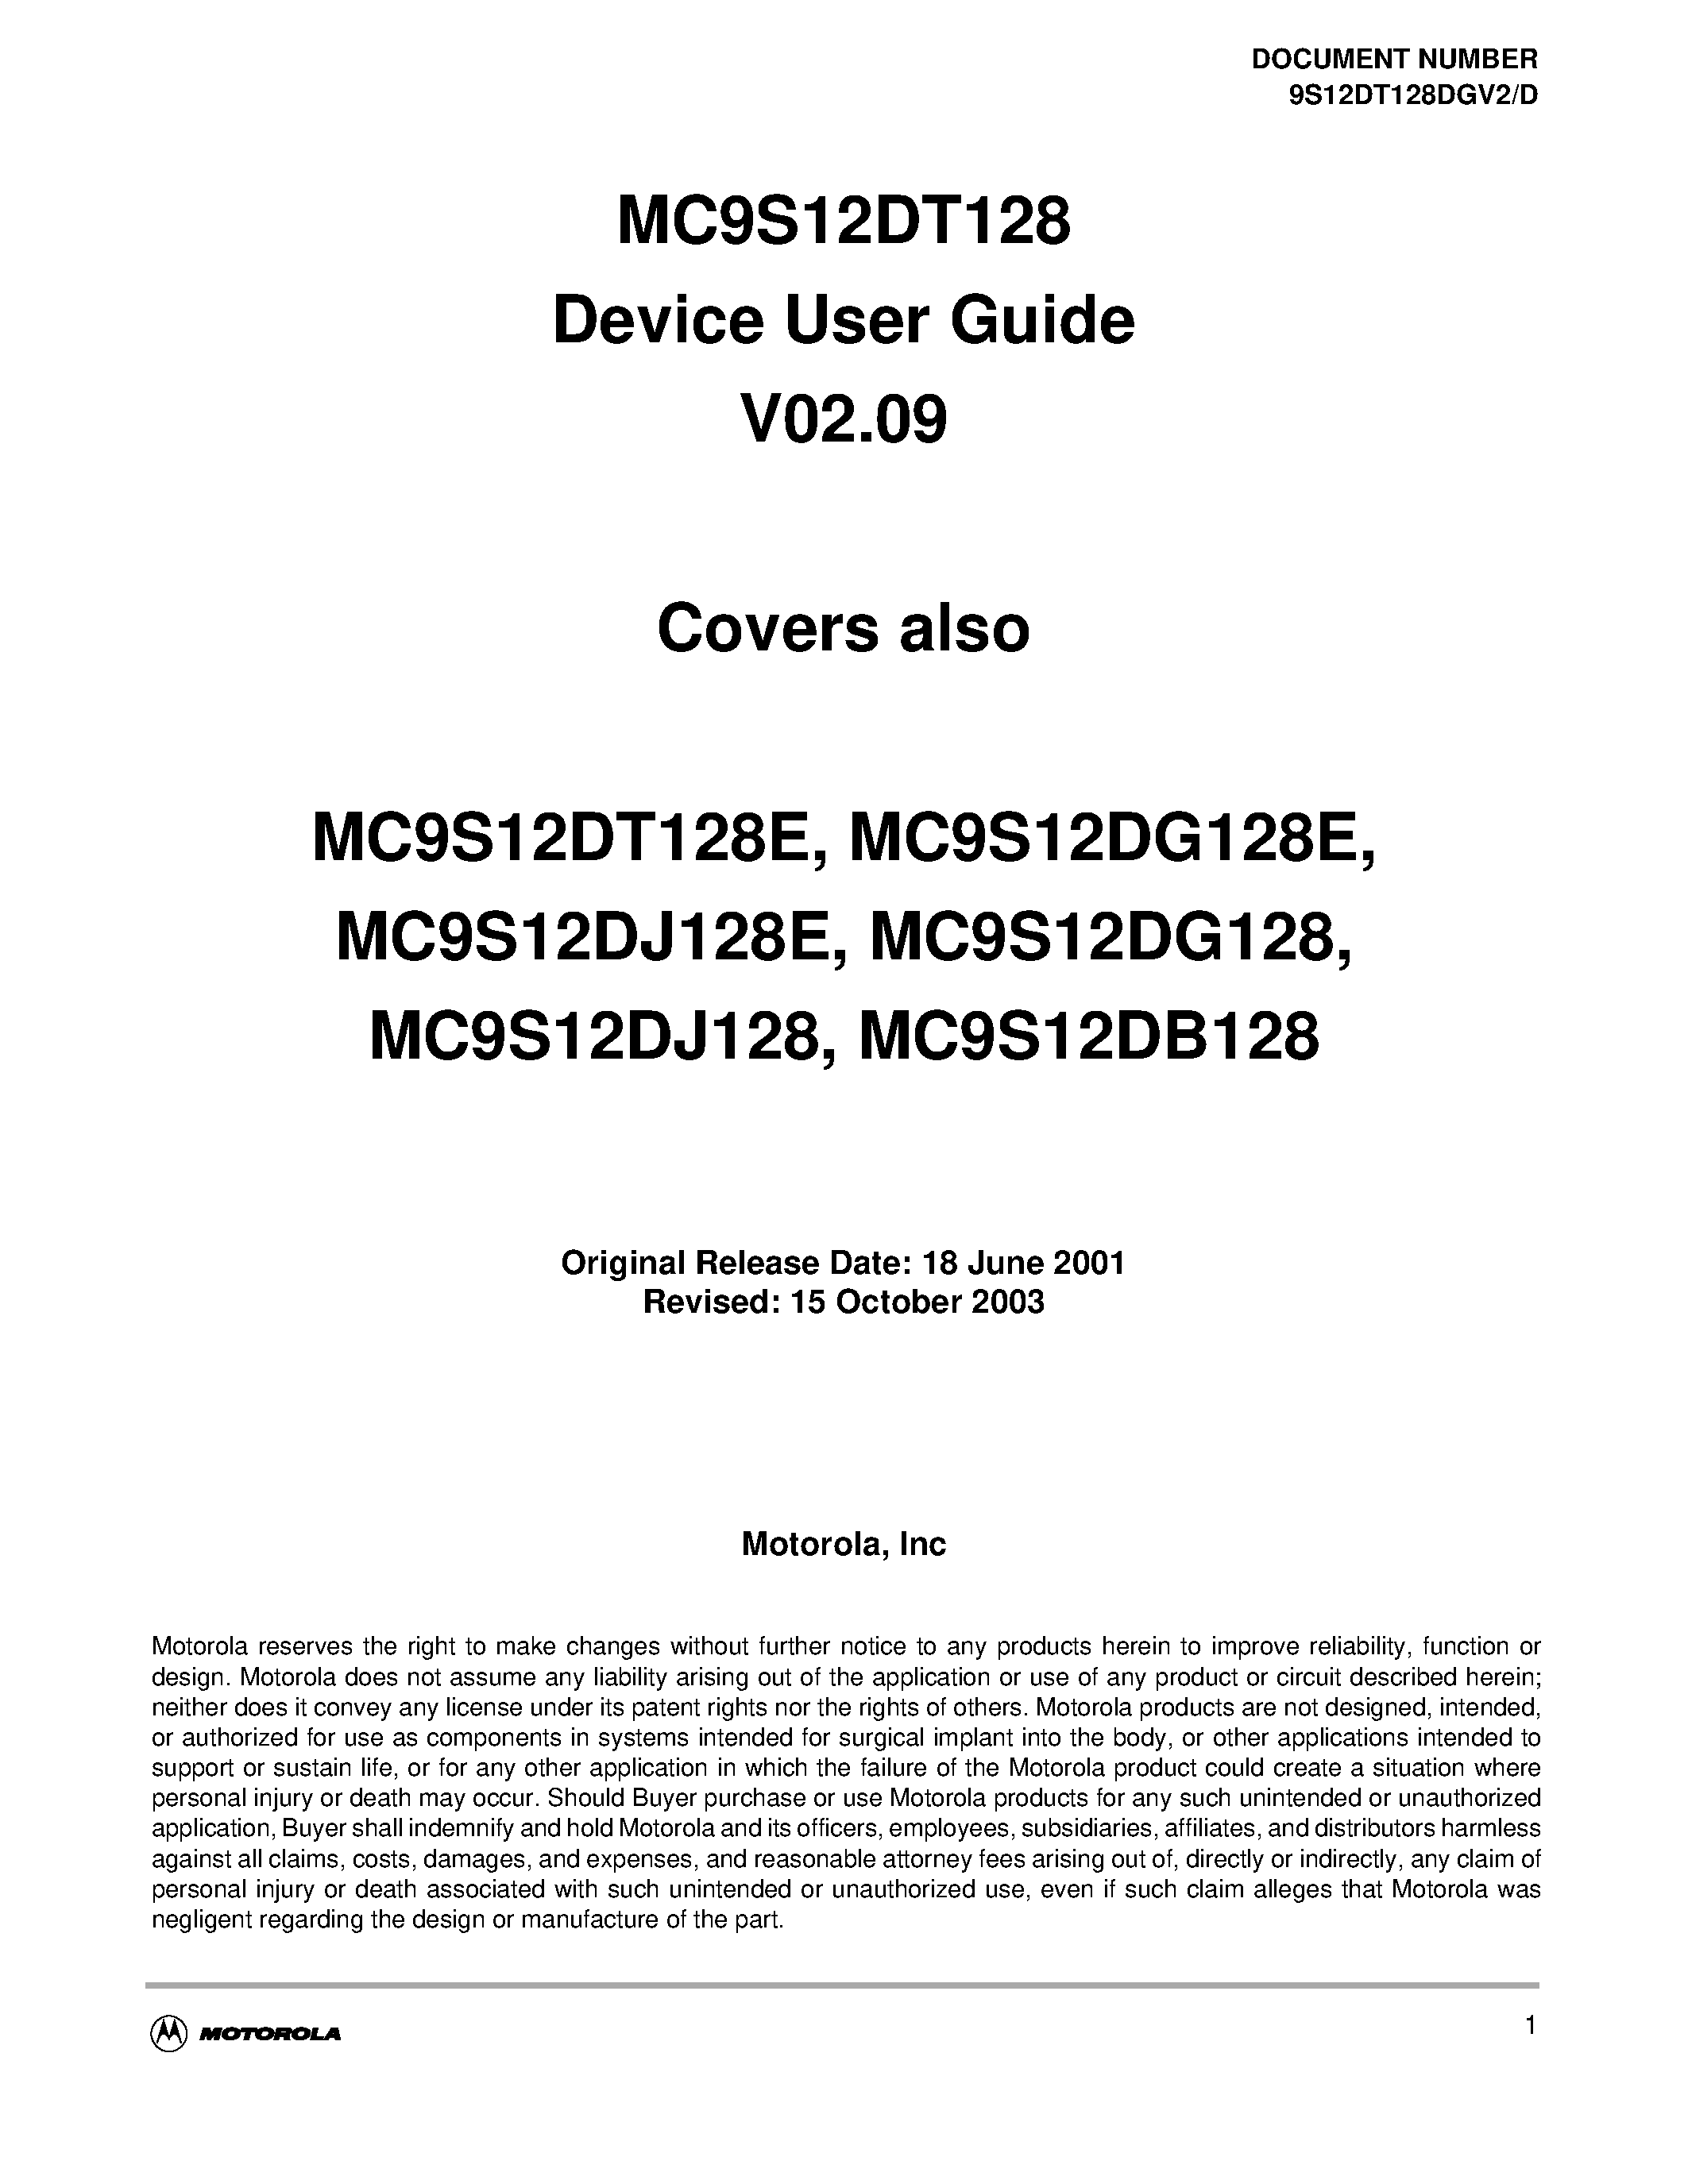 Datasheet S12MSCANV2D - MC9S12DT128 Device User Guide V02.09 page 1